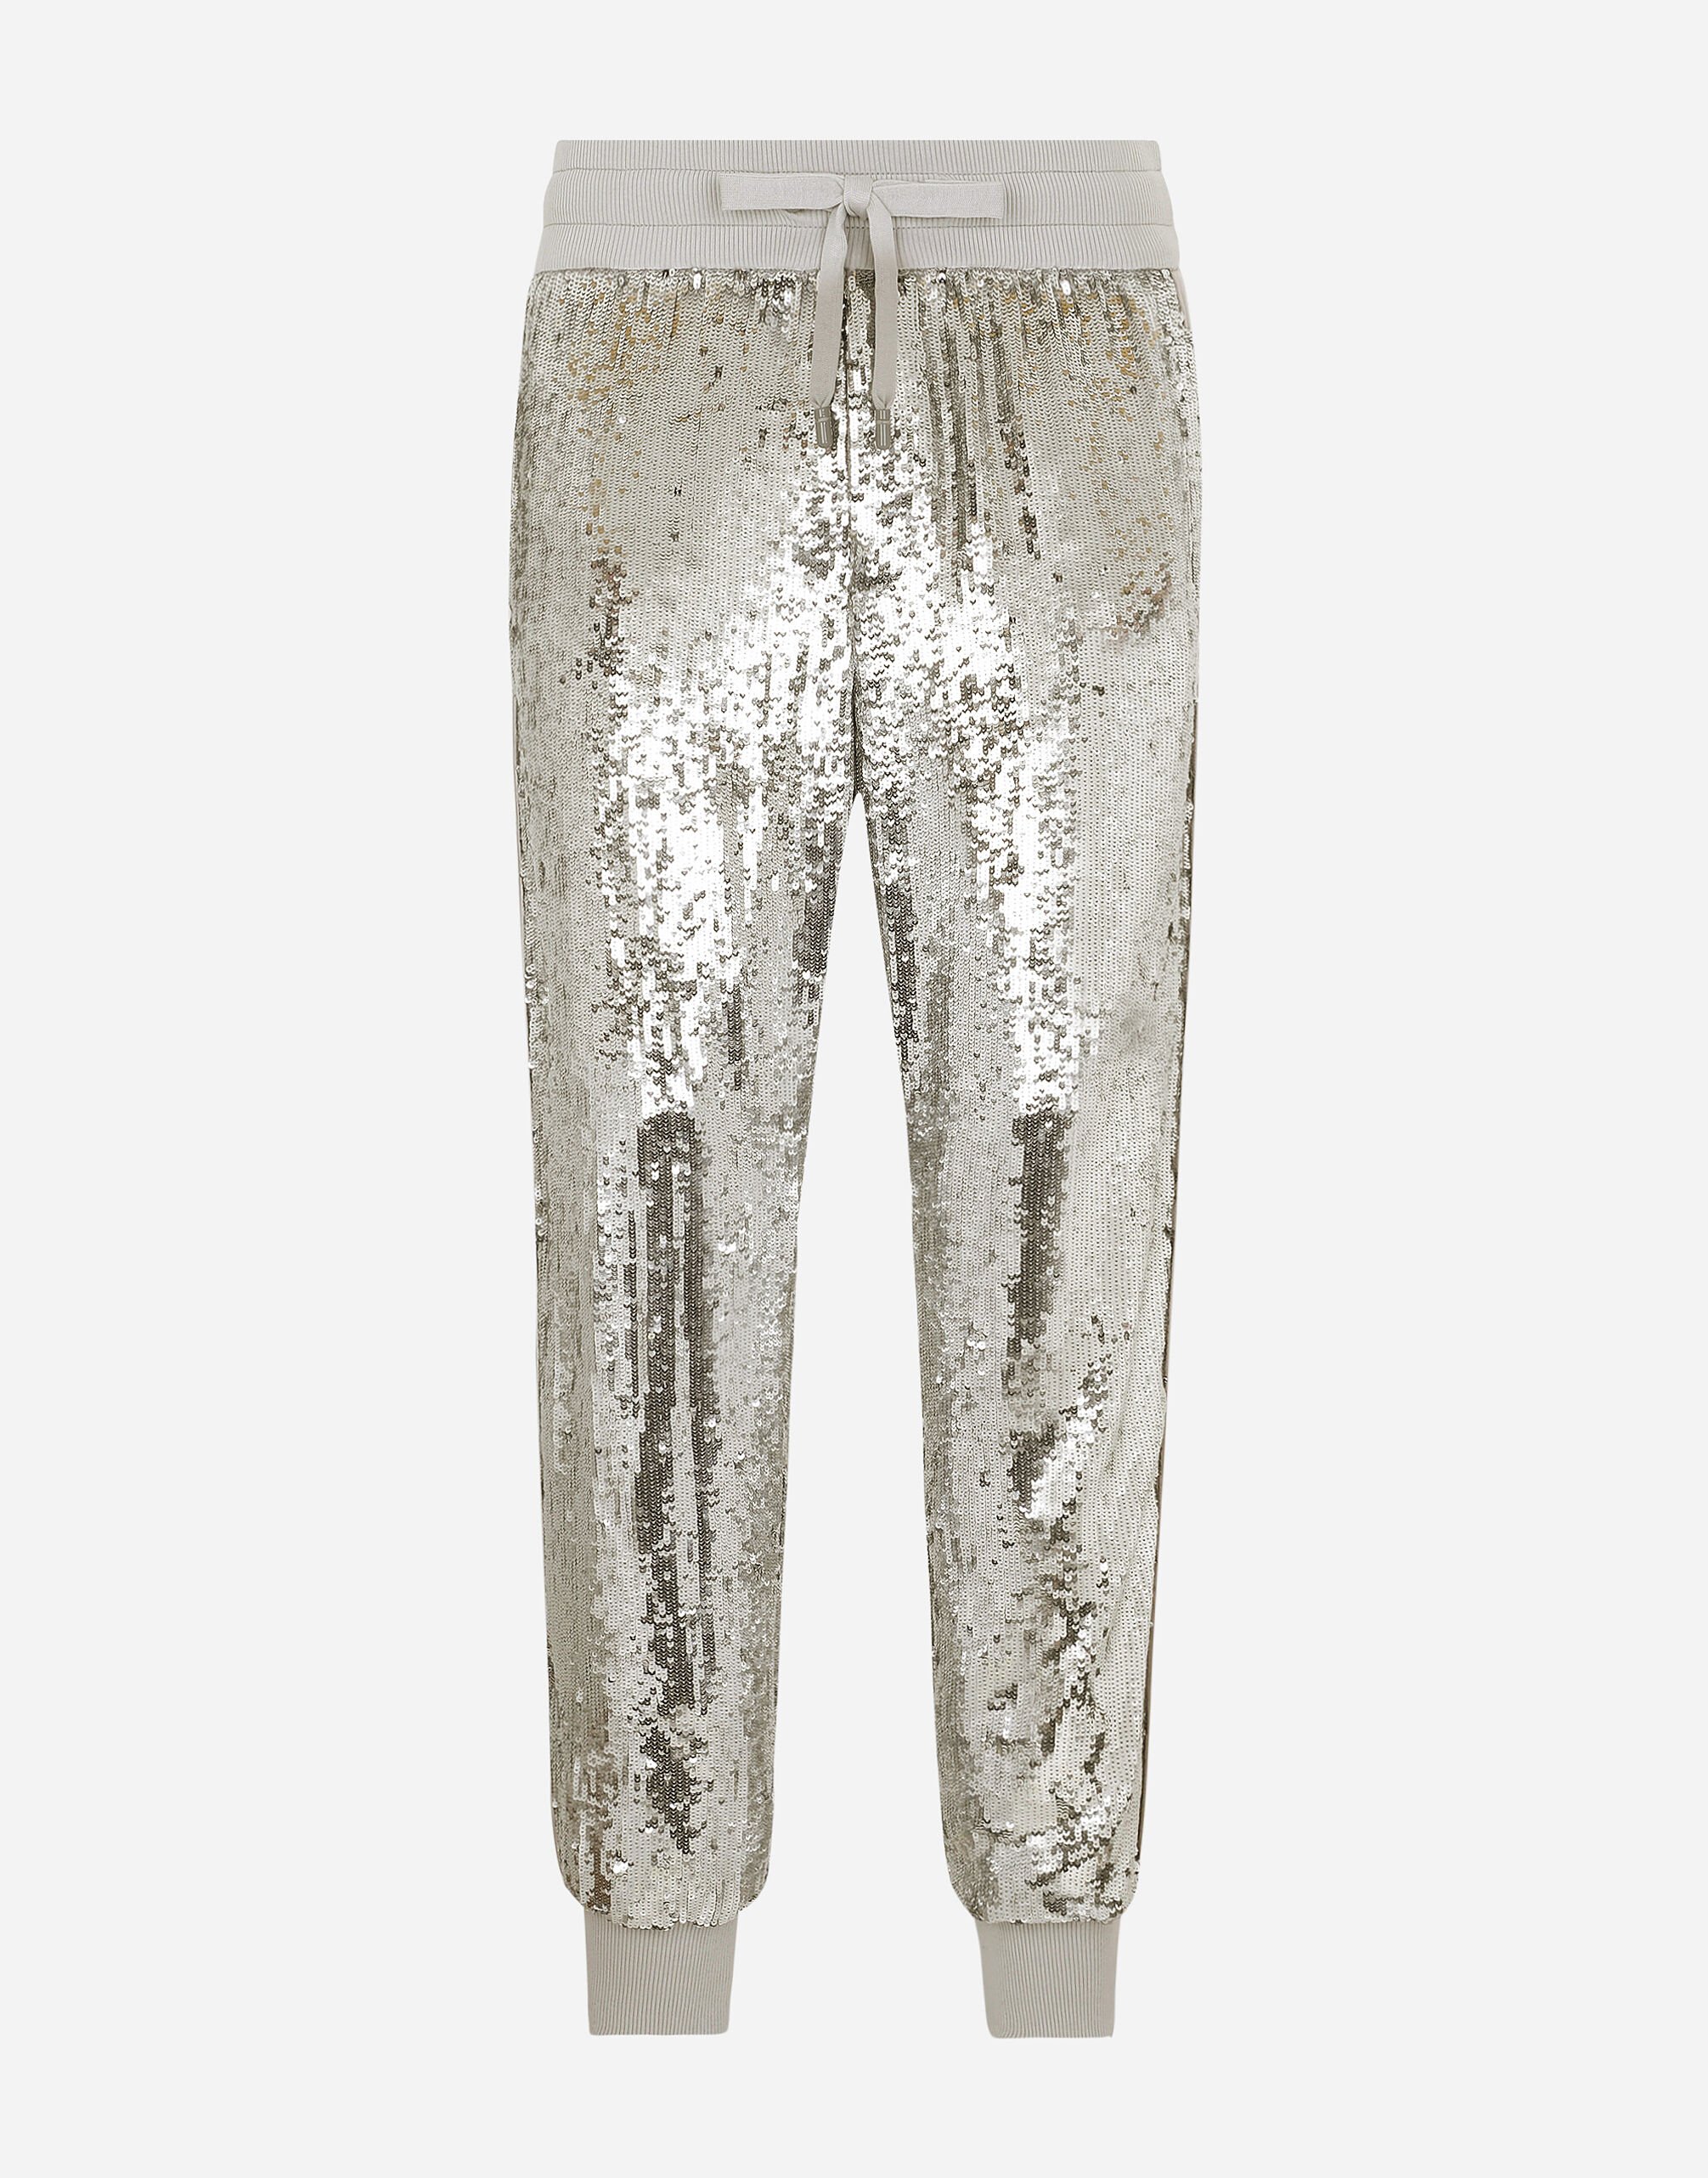 Dolce & Gabbana Sequined jogging pants Silver GP01YTHLMTJ